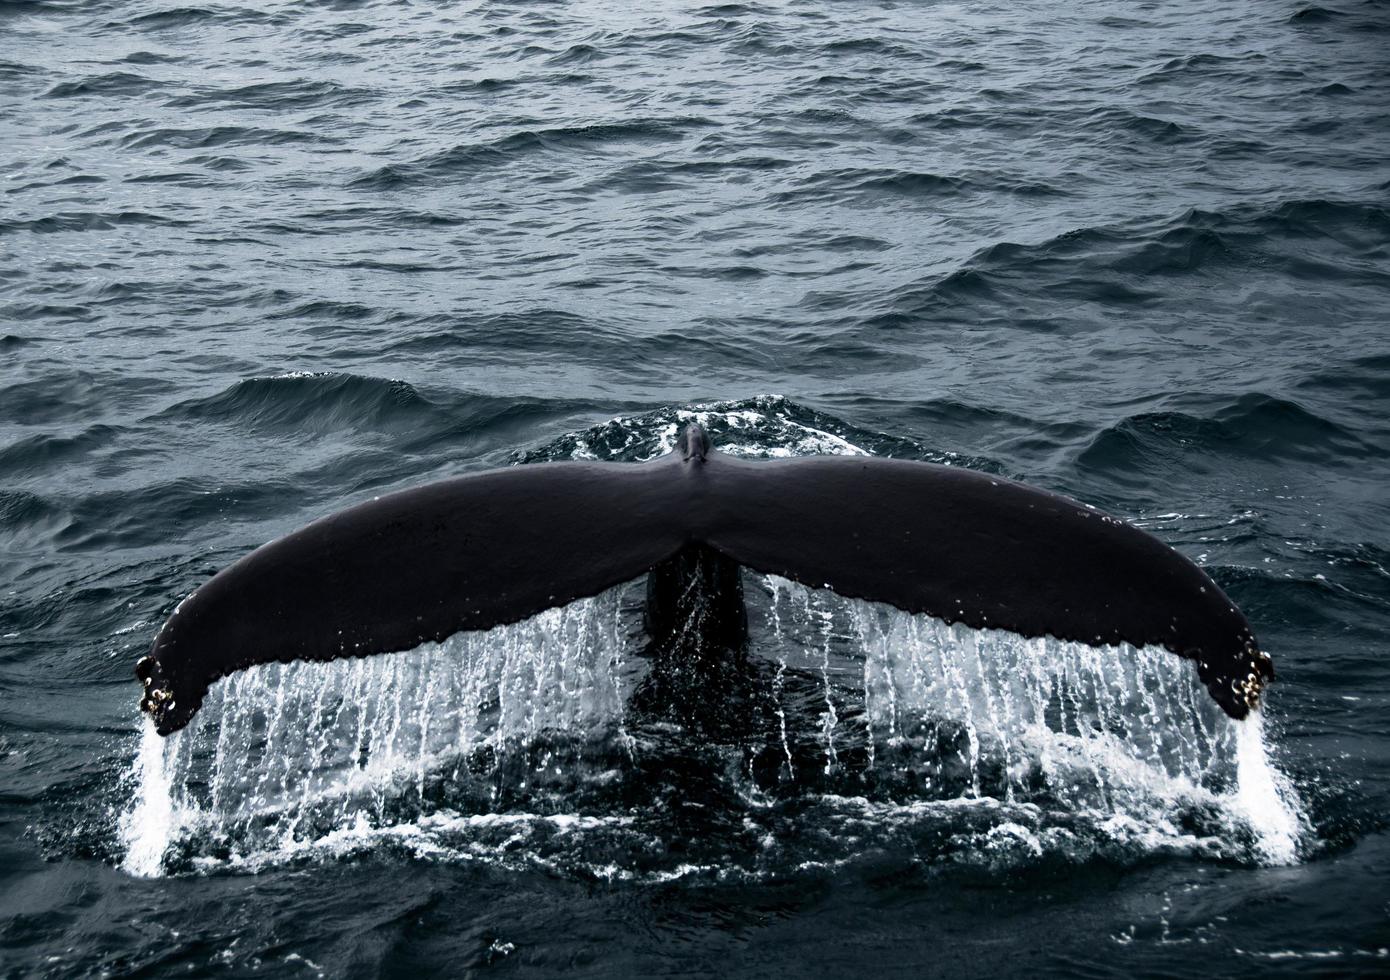 Queue de baleine géante dans l'océan en Islande photo